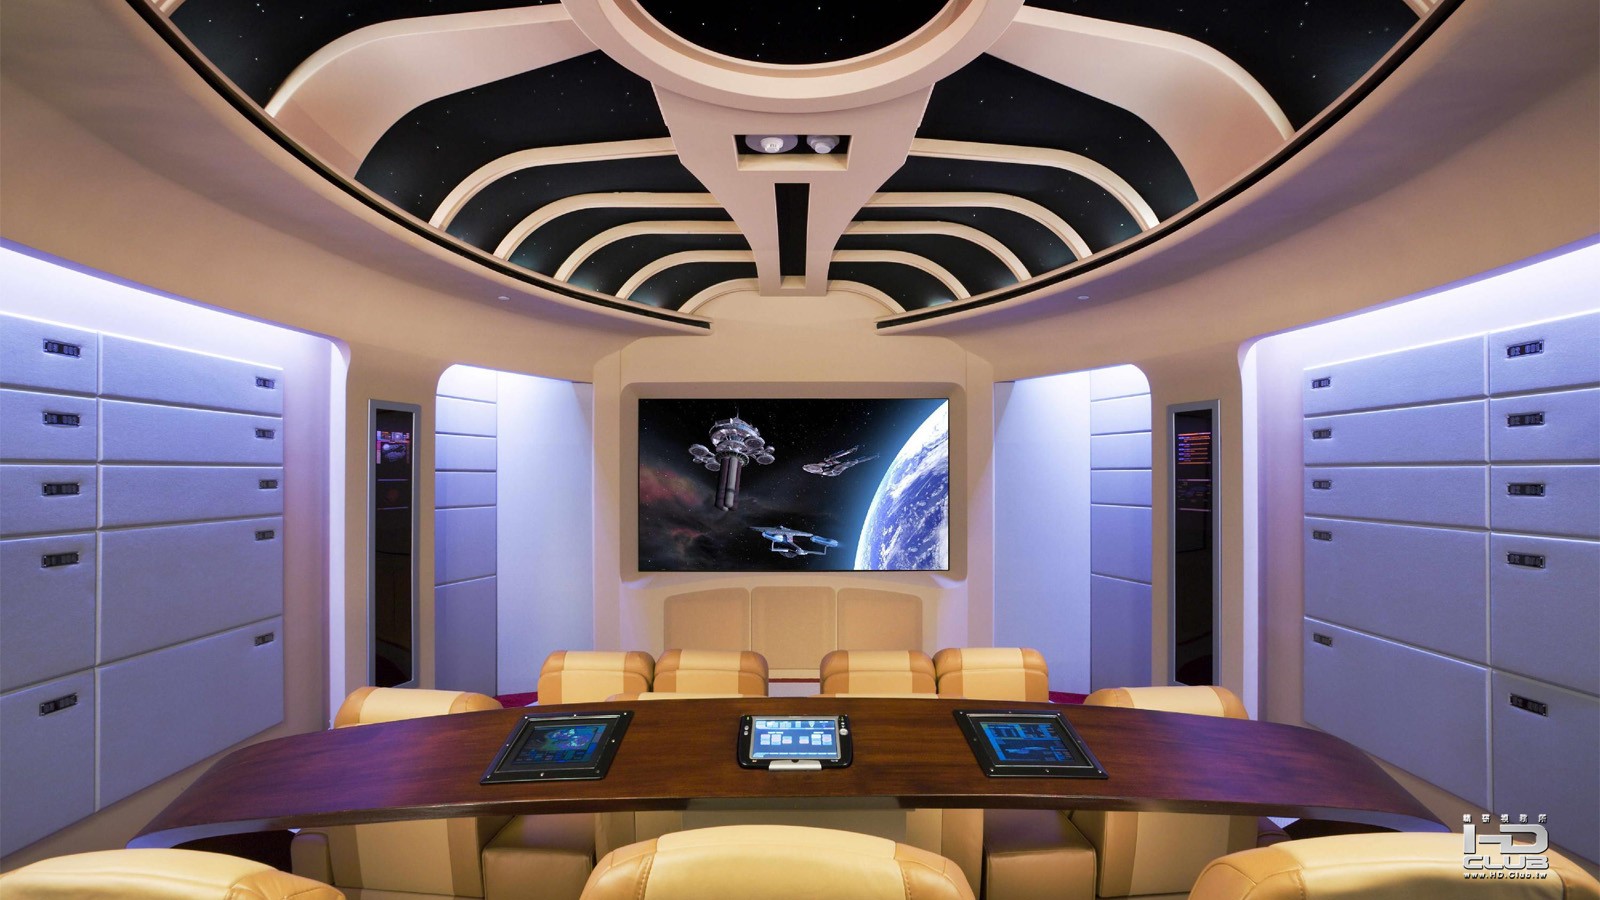 1_Star Trek: TNG home theater